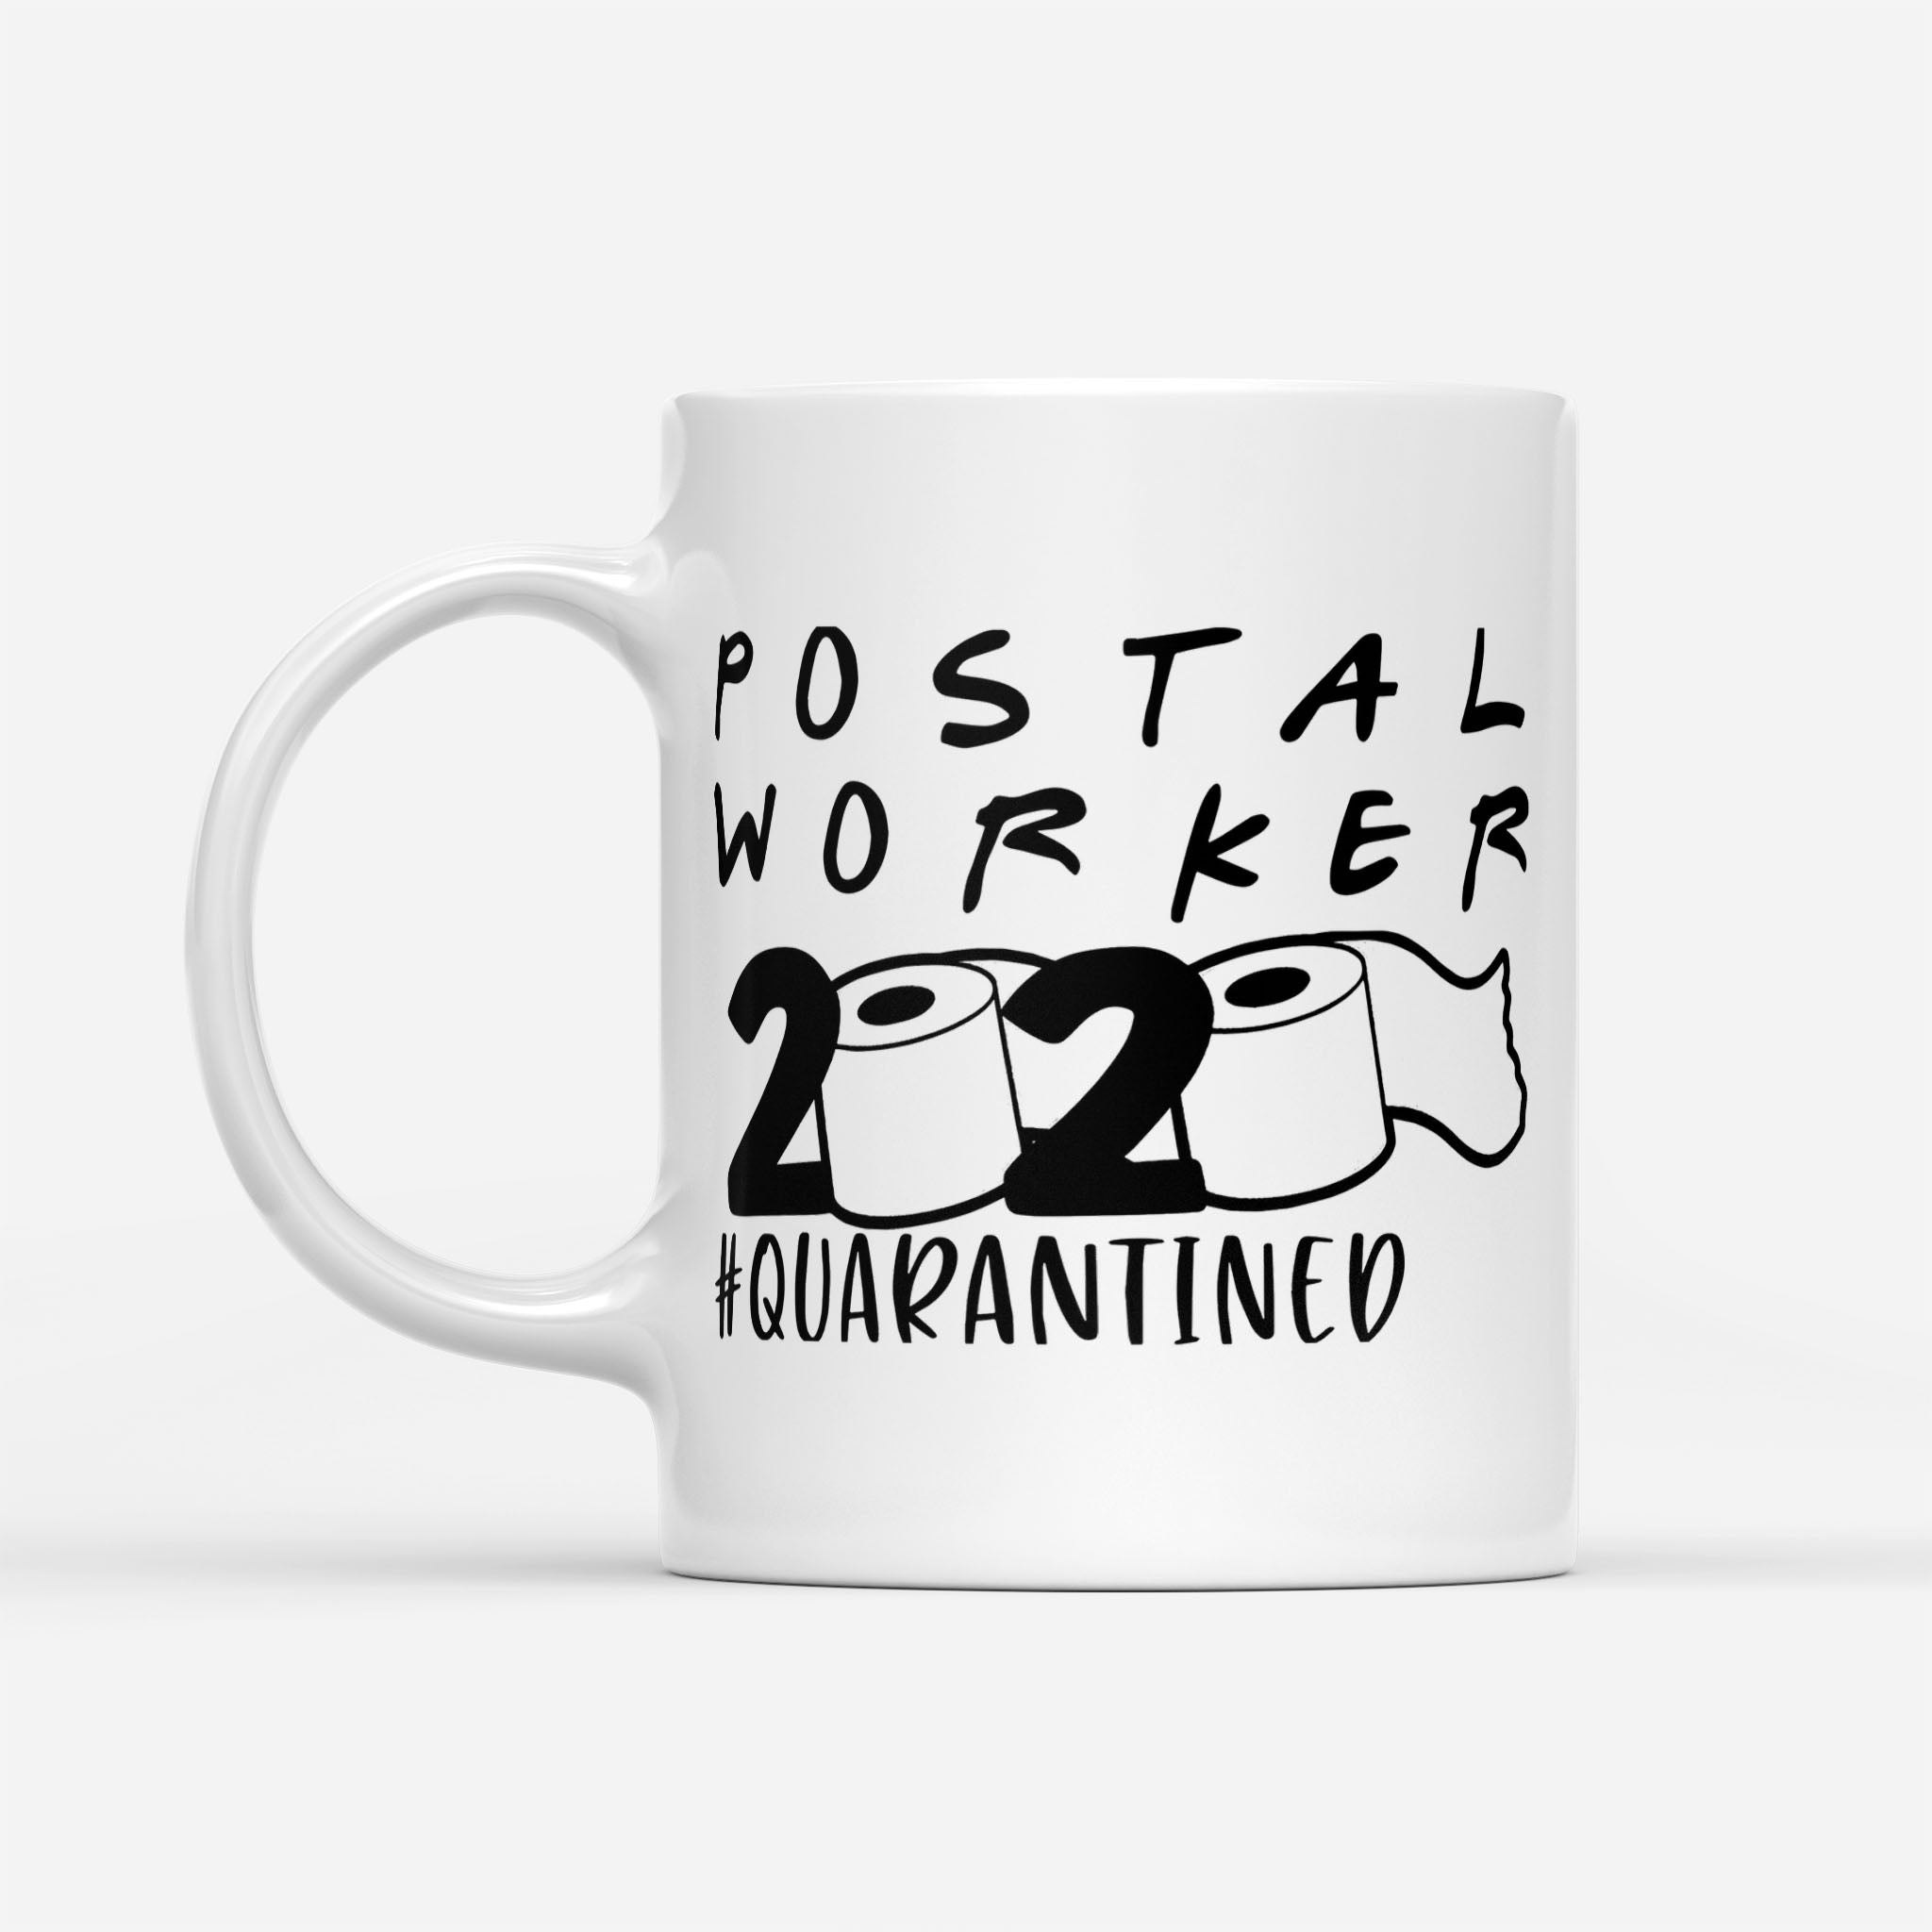 Official Postal Worker #quarantined - White Mug